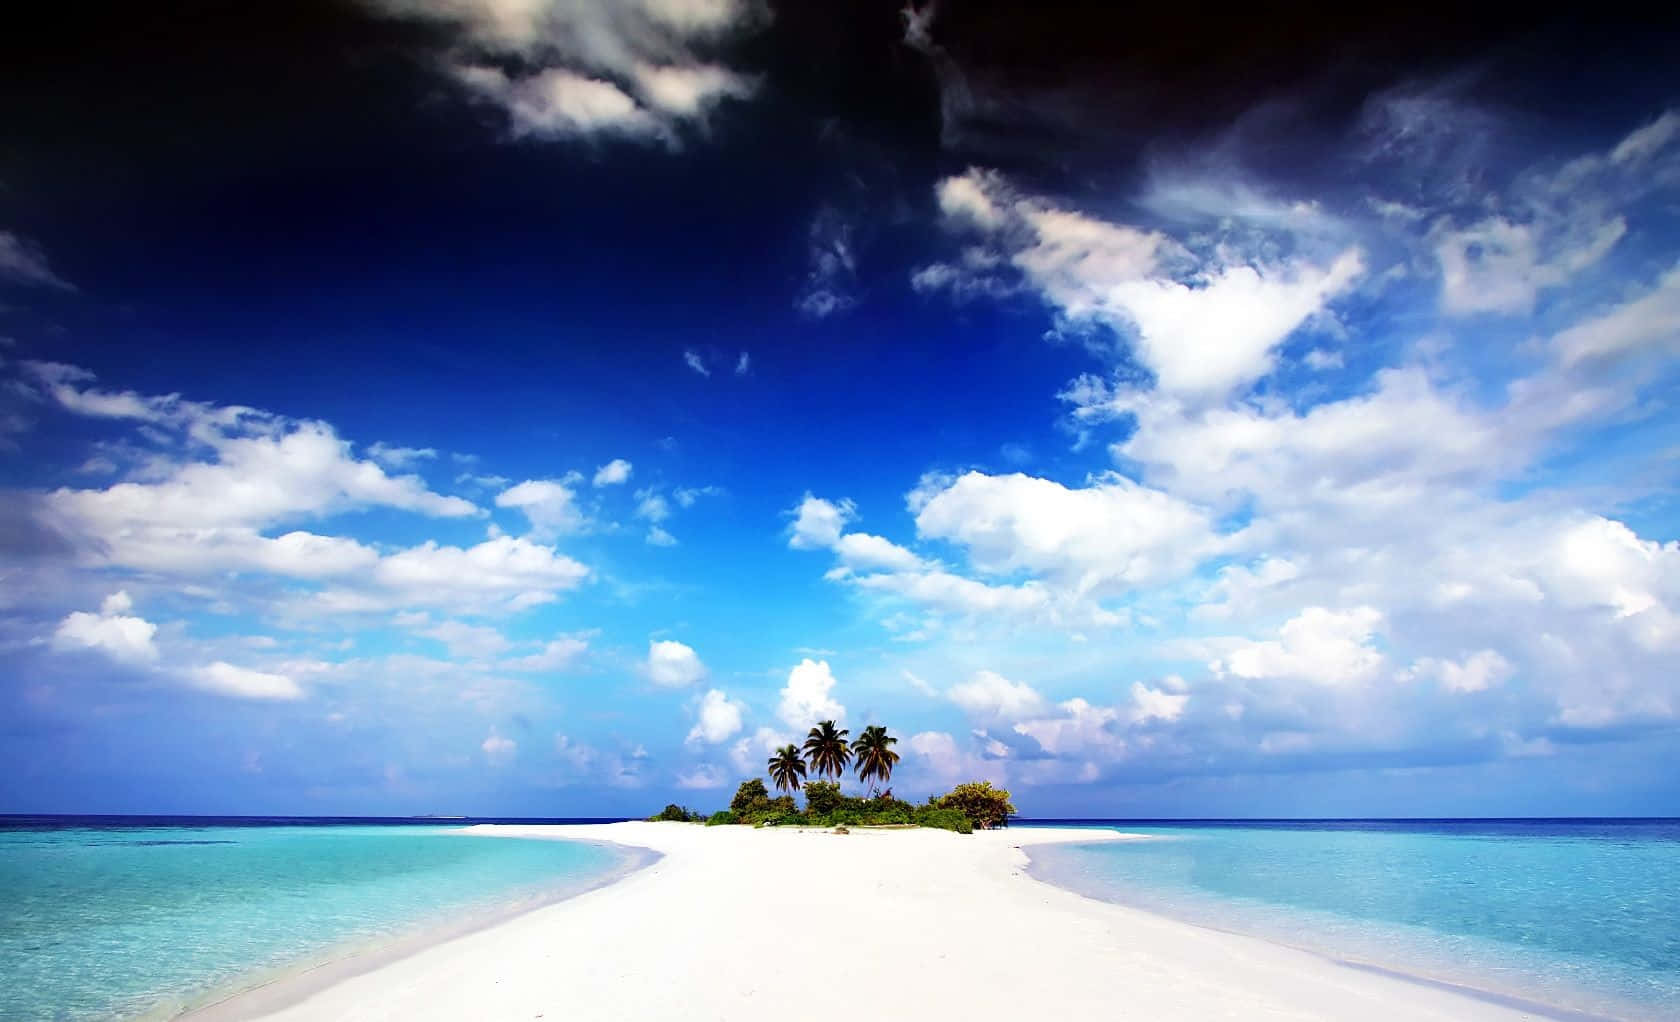 A White Sandy Island With Palm Trees And Blue Sky